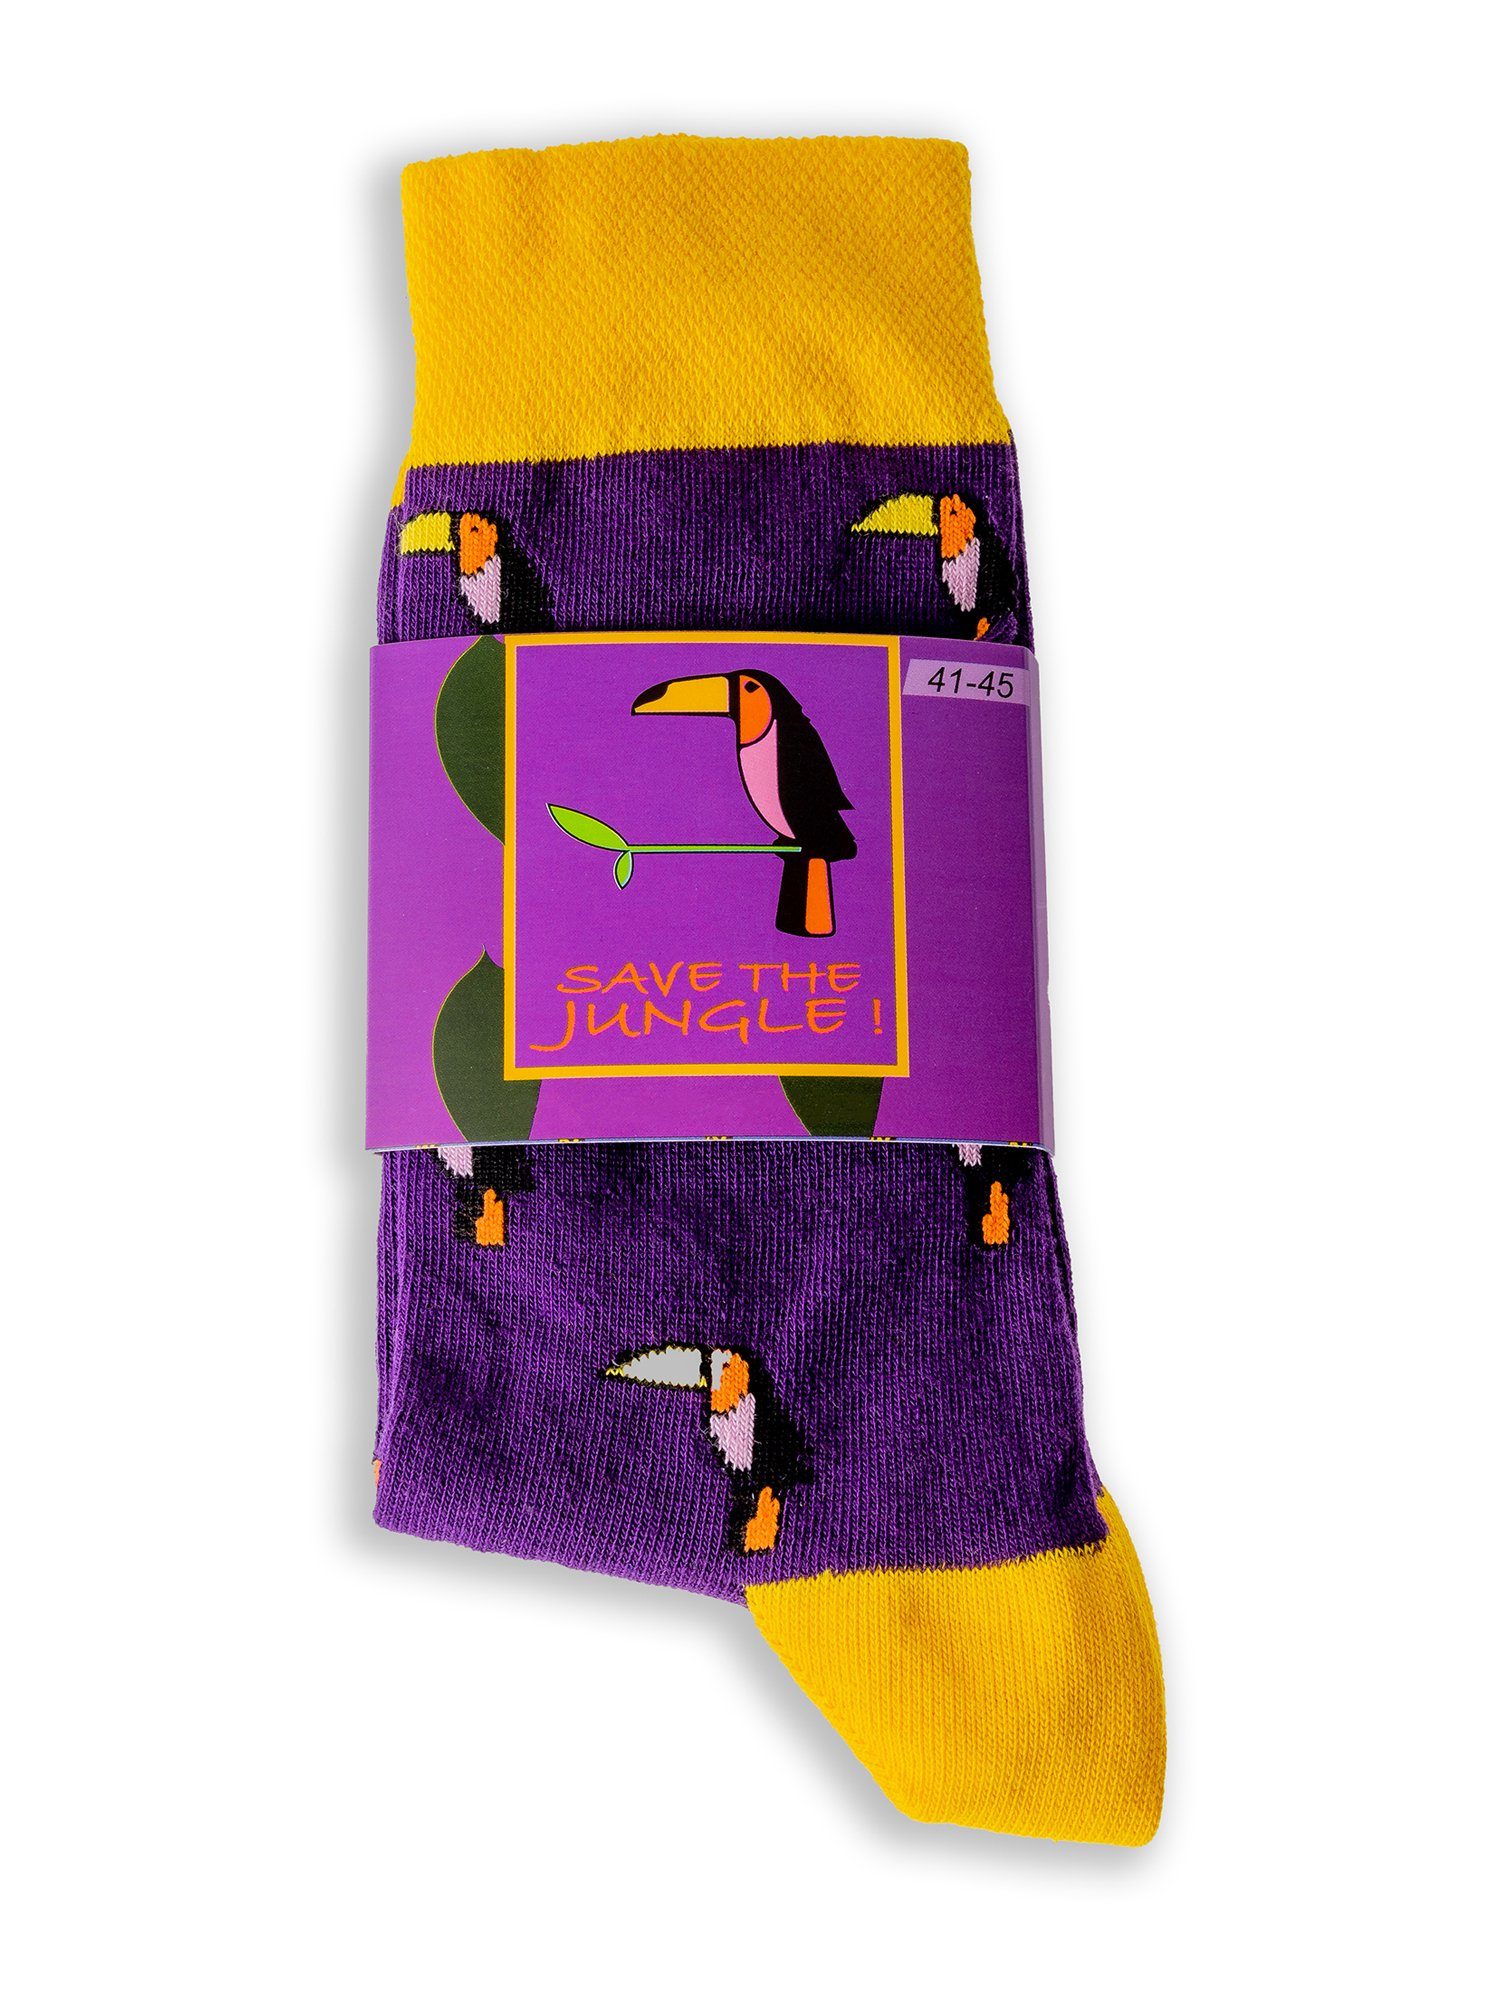 Chili Lifestyle Socks Banderole Freizeitsocken Leisure Tucan